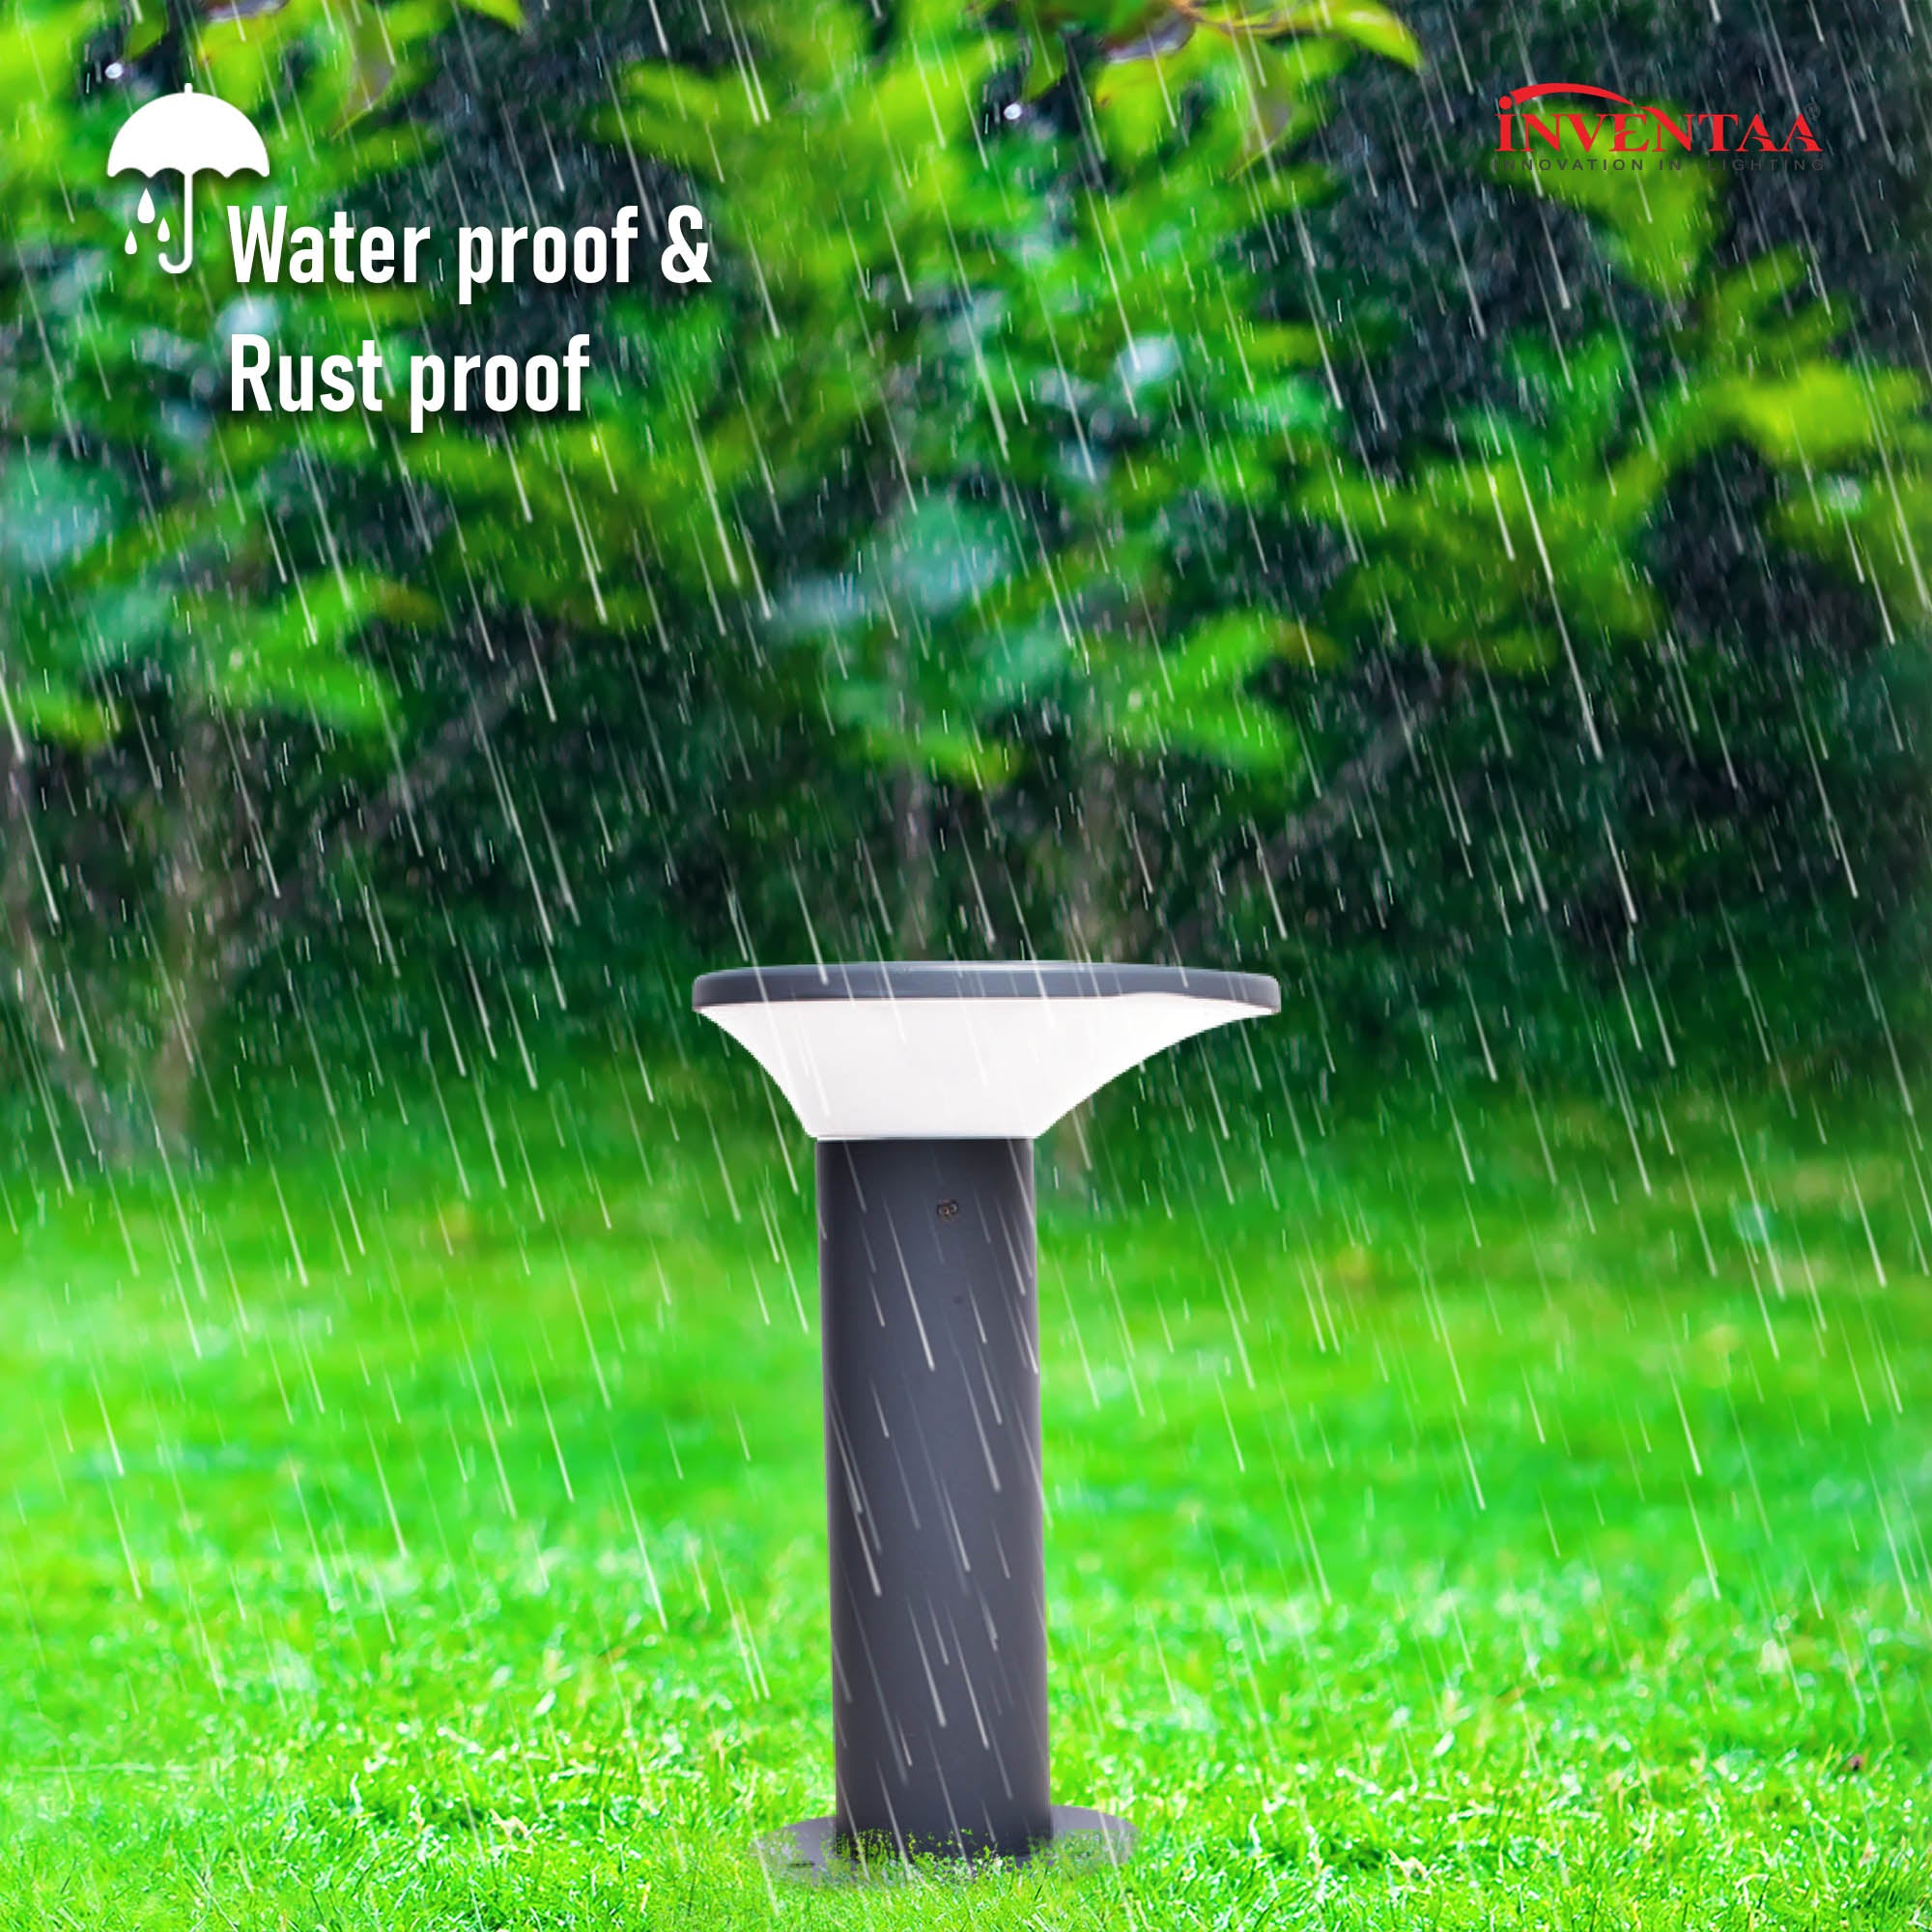 Romy 2 feet led garden bollard light featuring its rustproof and waterproof for outdoor lighting use #size_2 feet